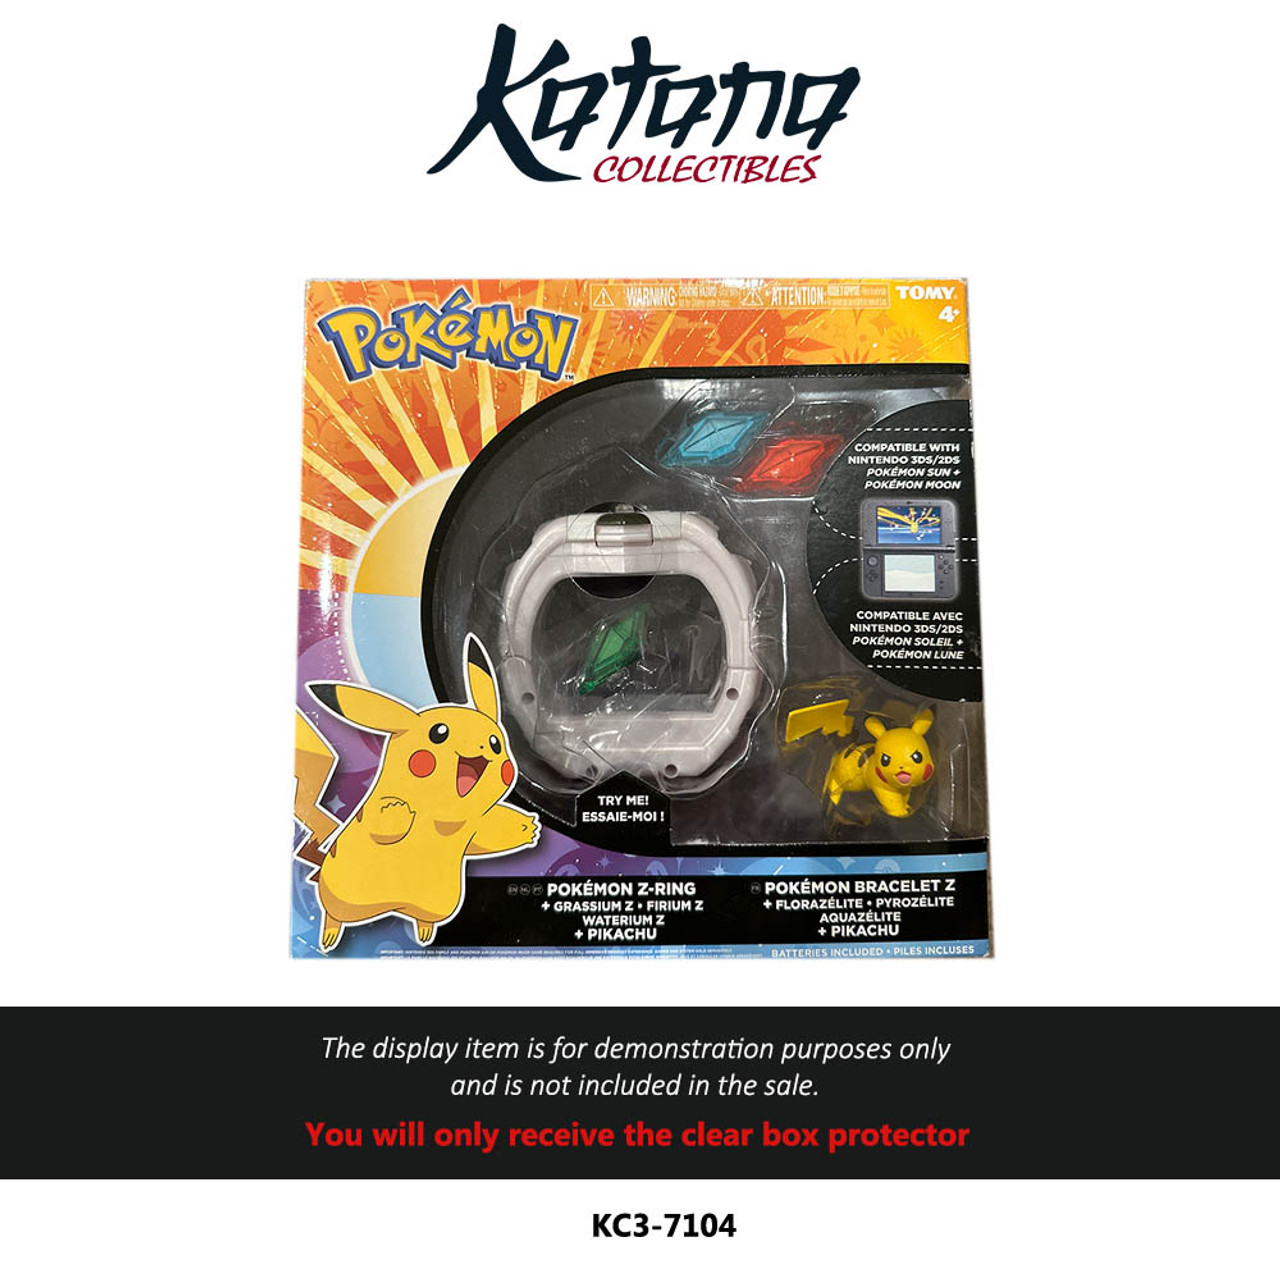 Katana Collectibles Protector For Pokémon Z-Ring Bracelet Box